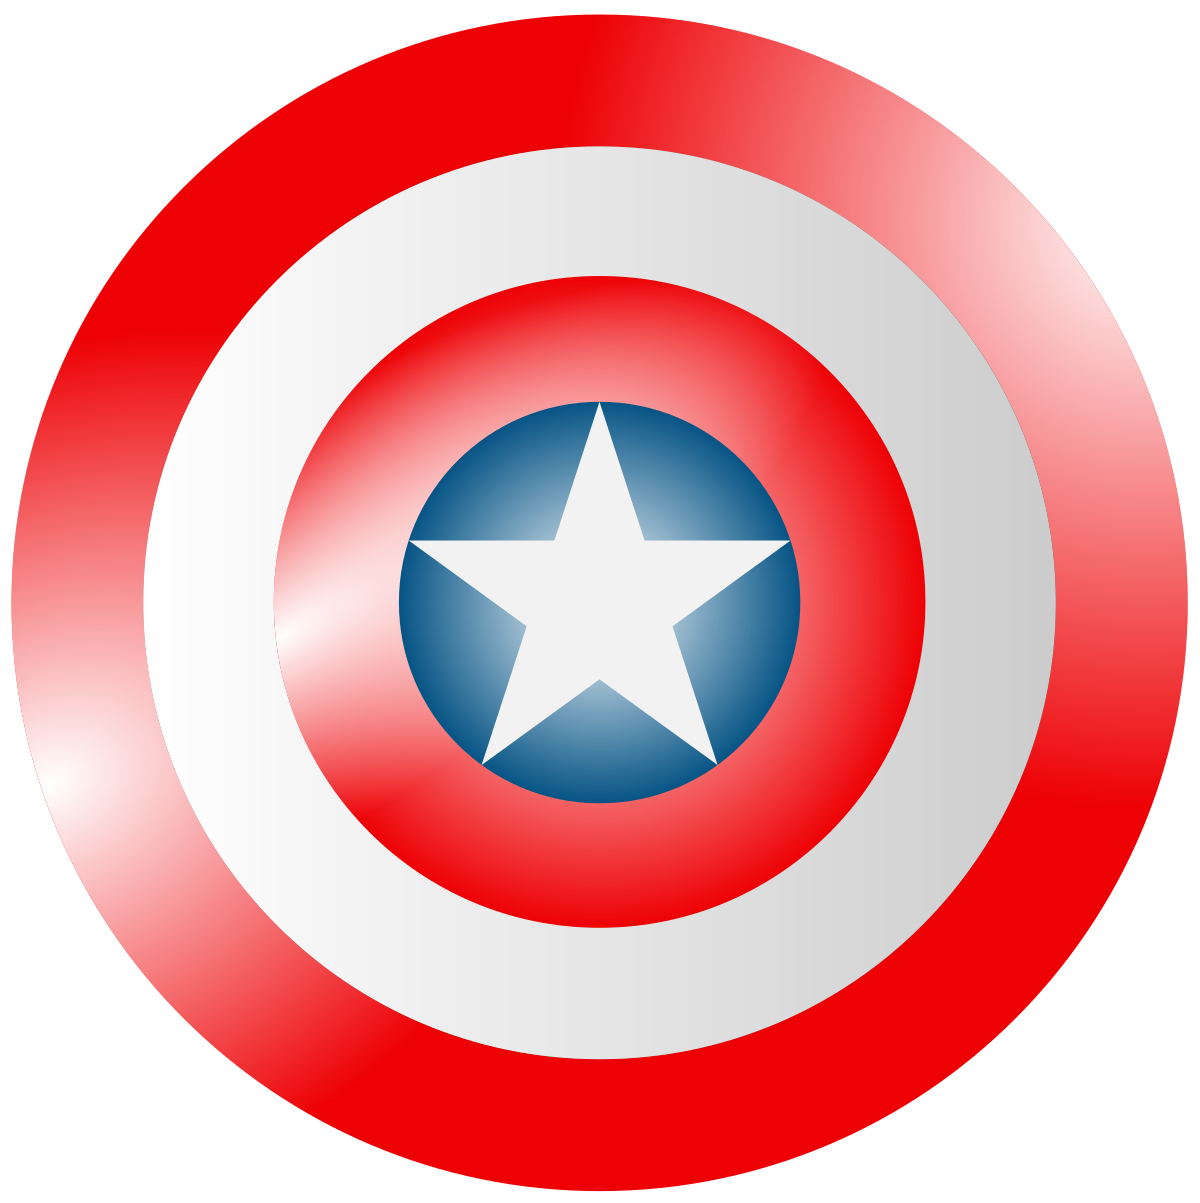 american shield